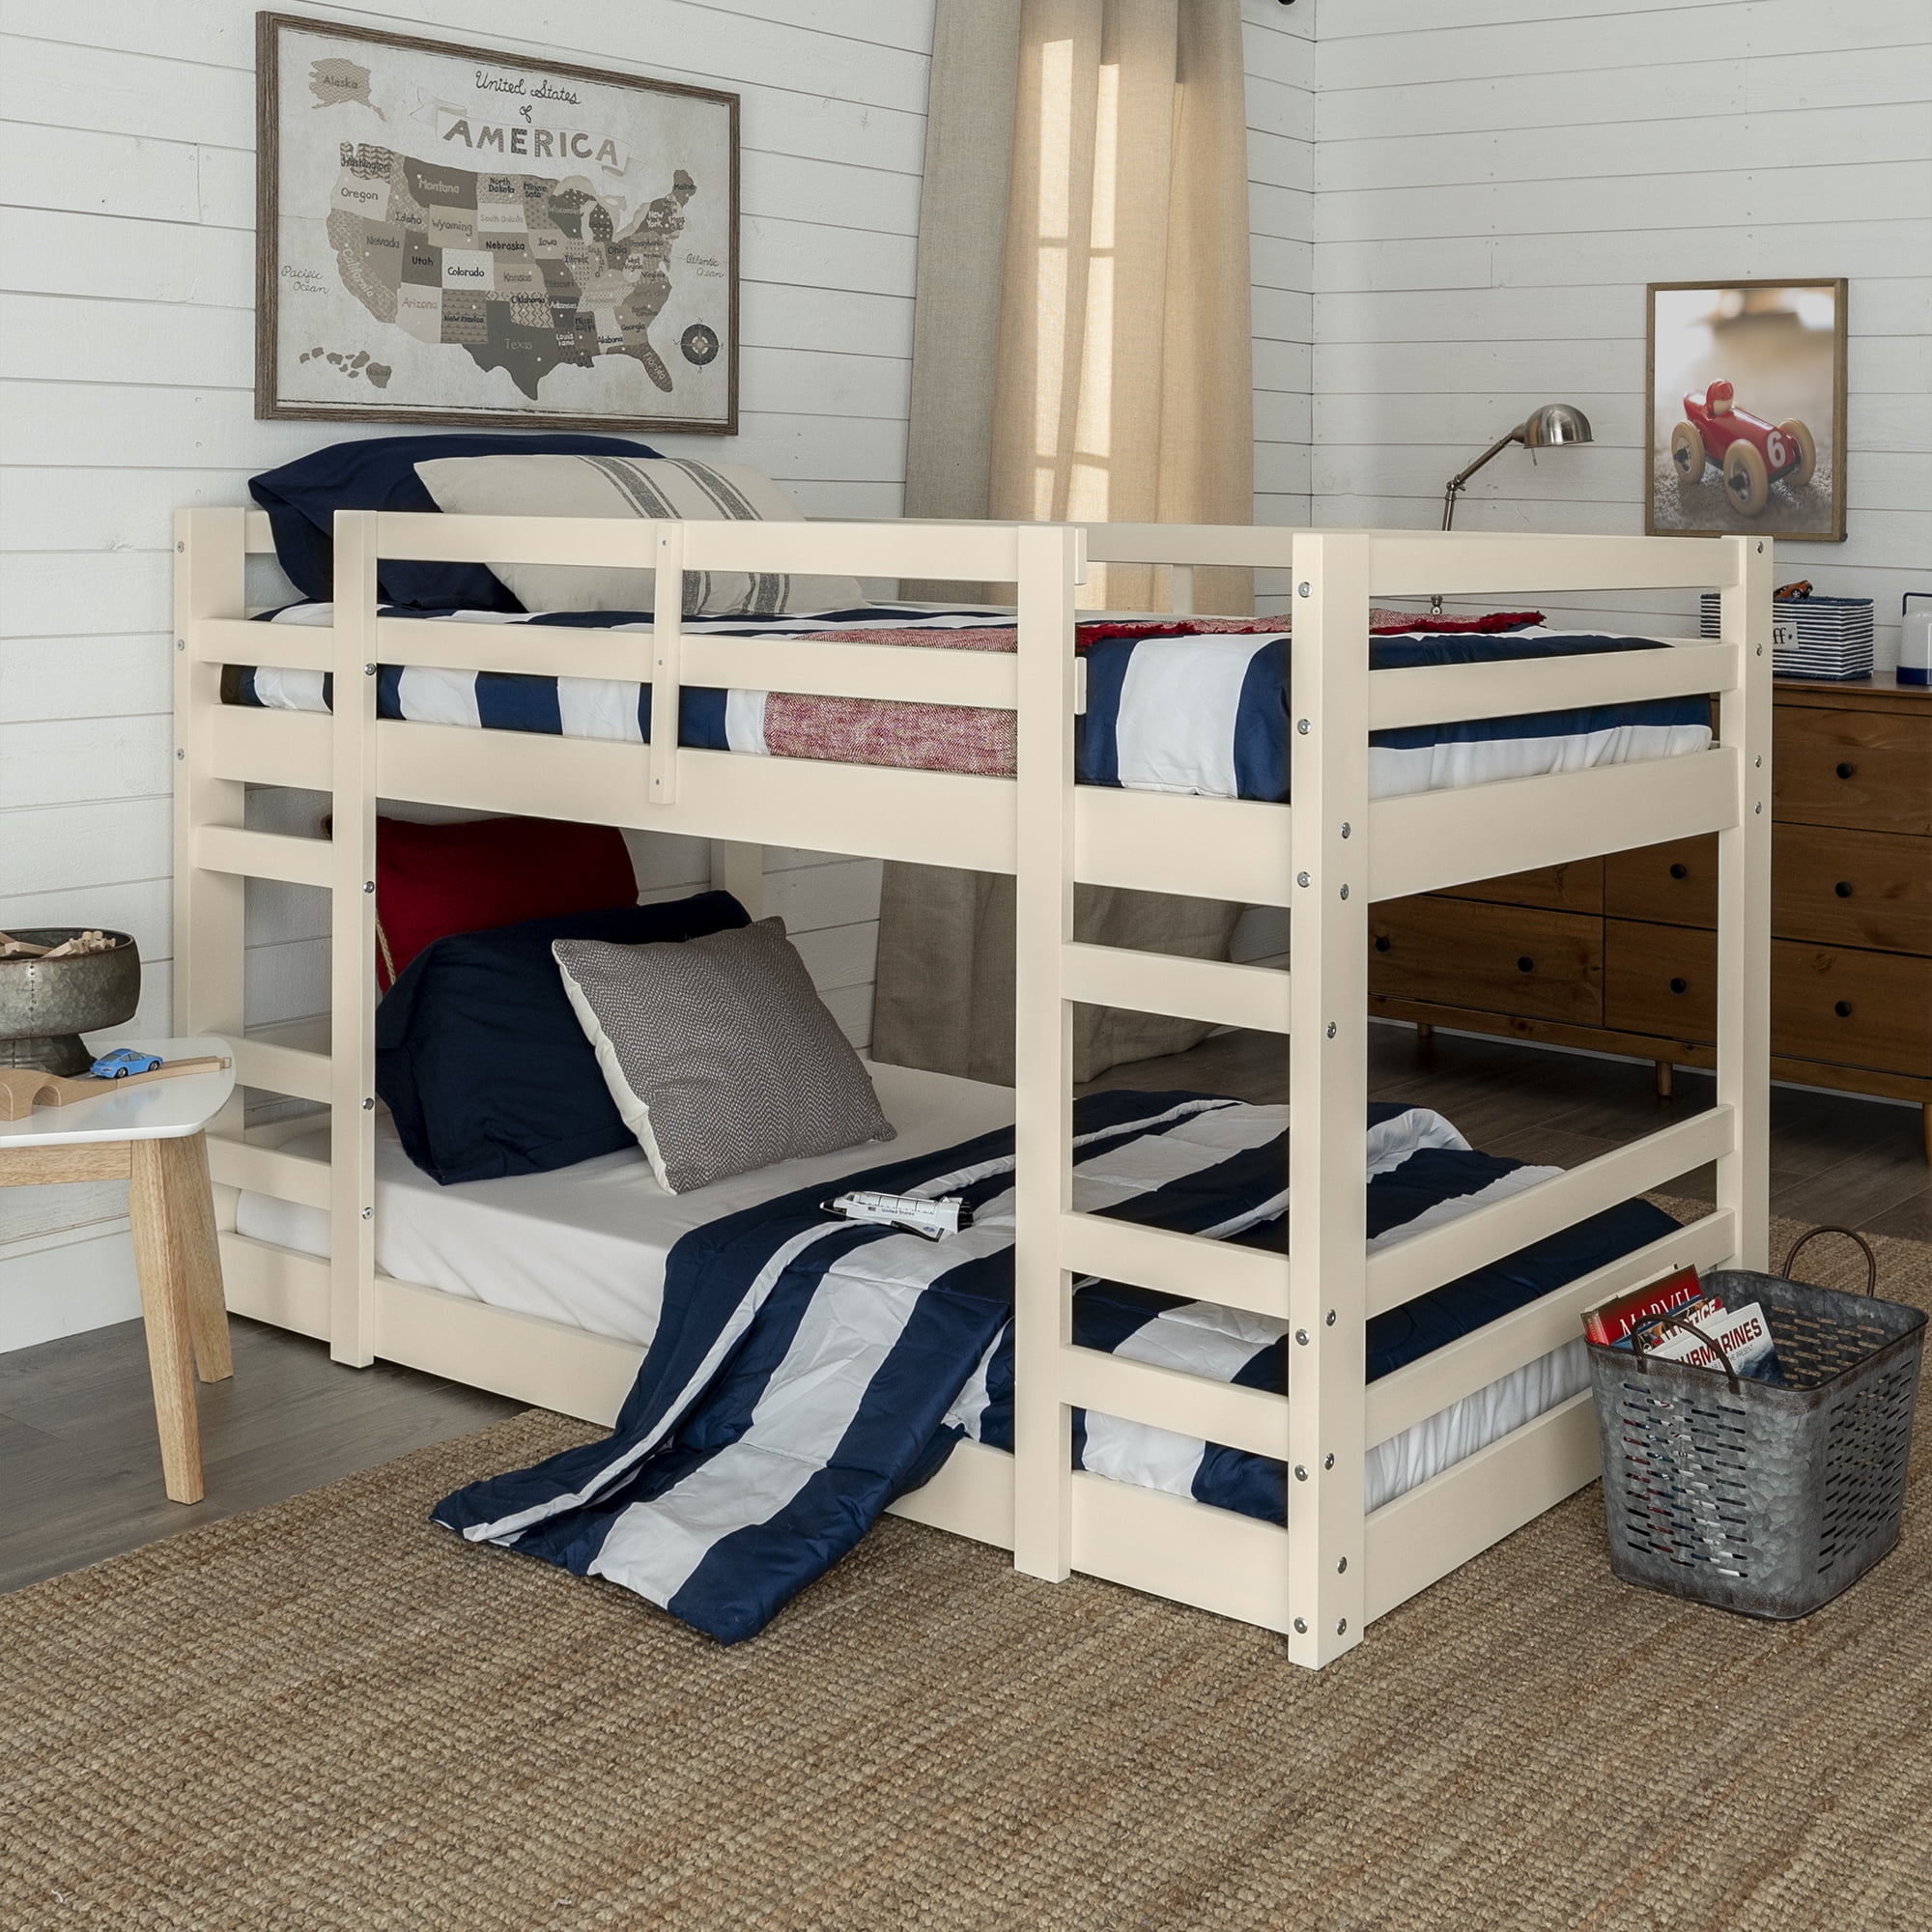 walmart bunk beds twin over twin